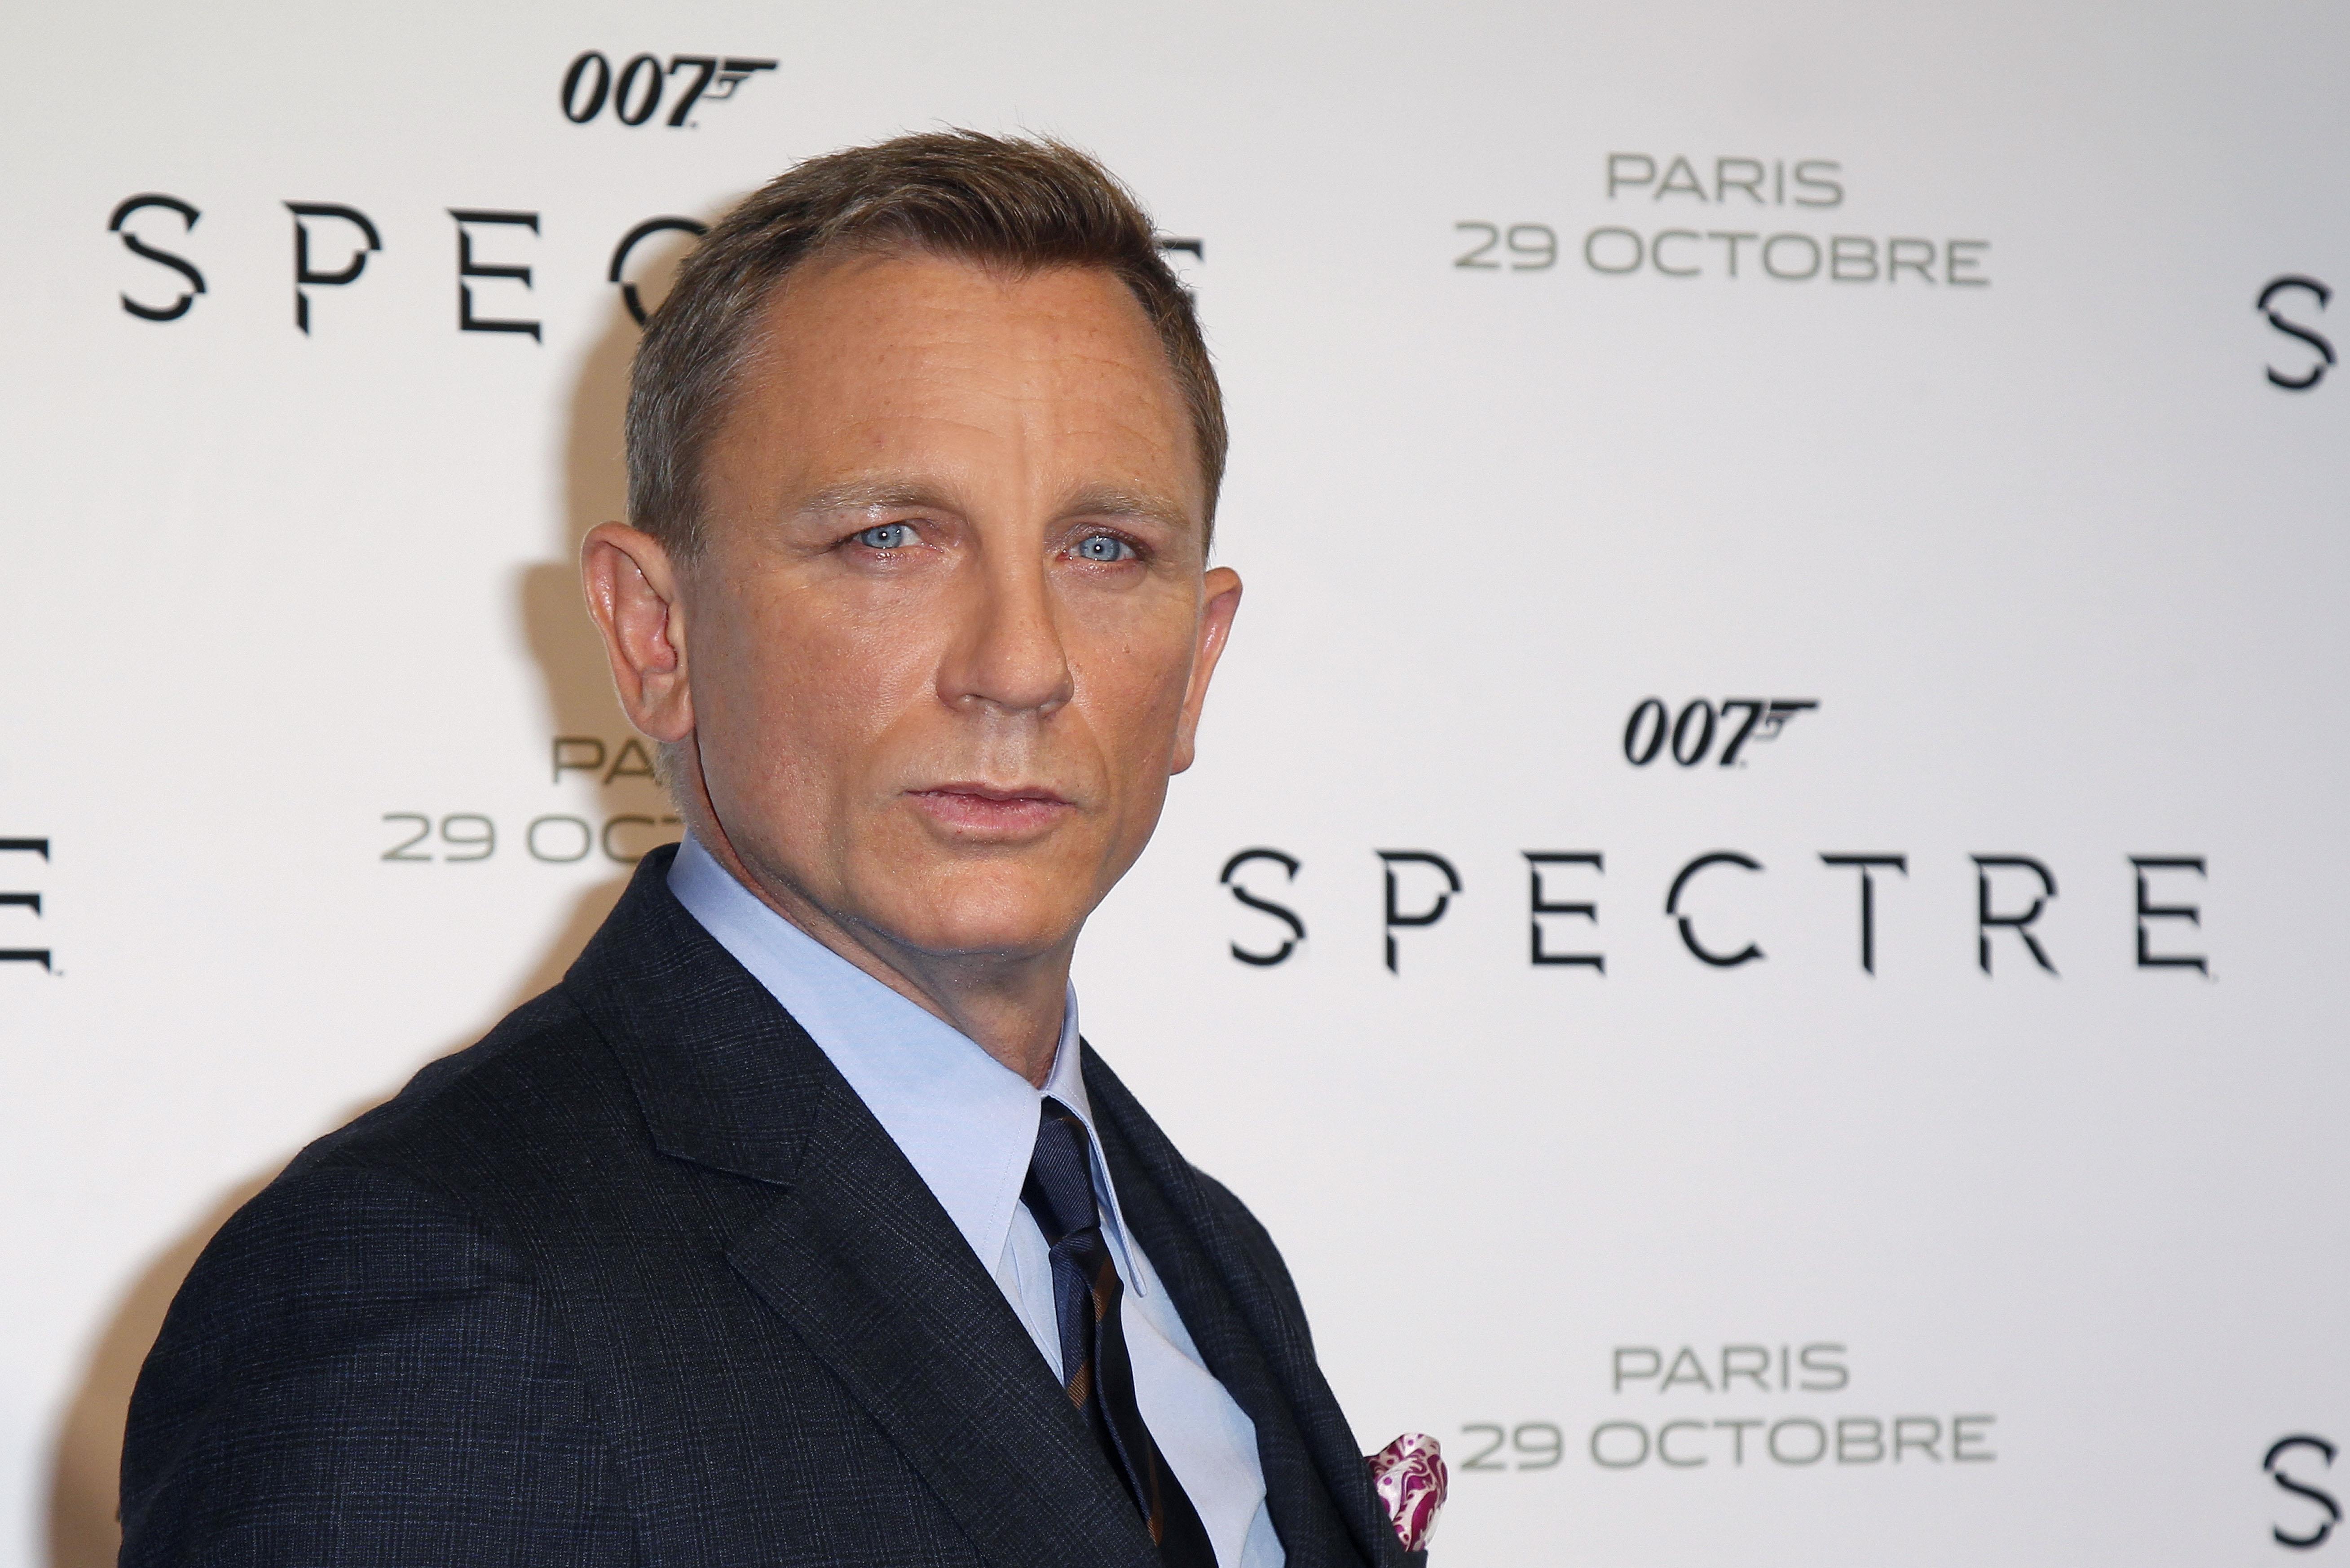 James Bond - product placement w filmach - Przywództwo - Forbes.pl